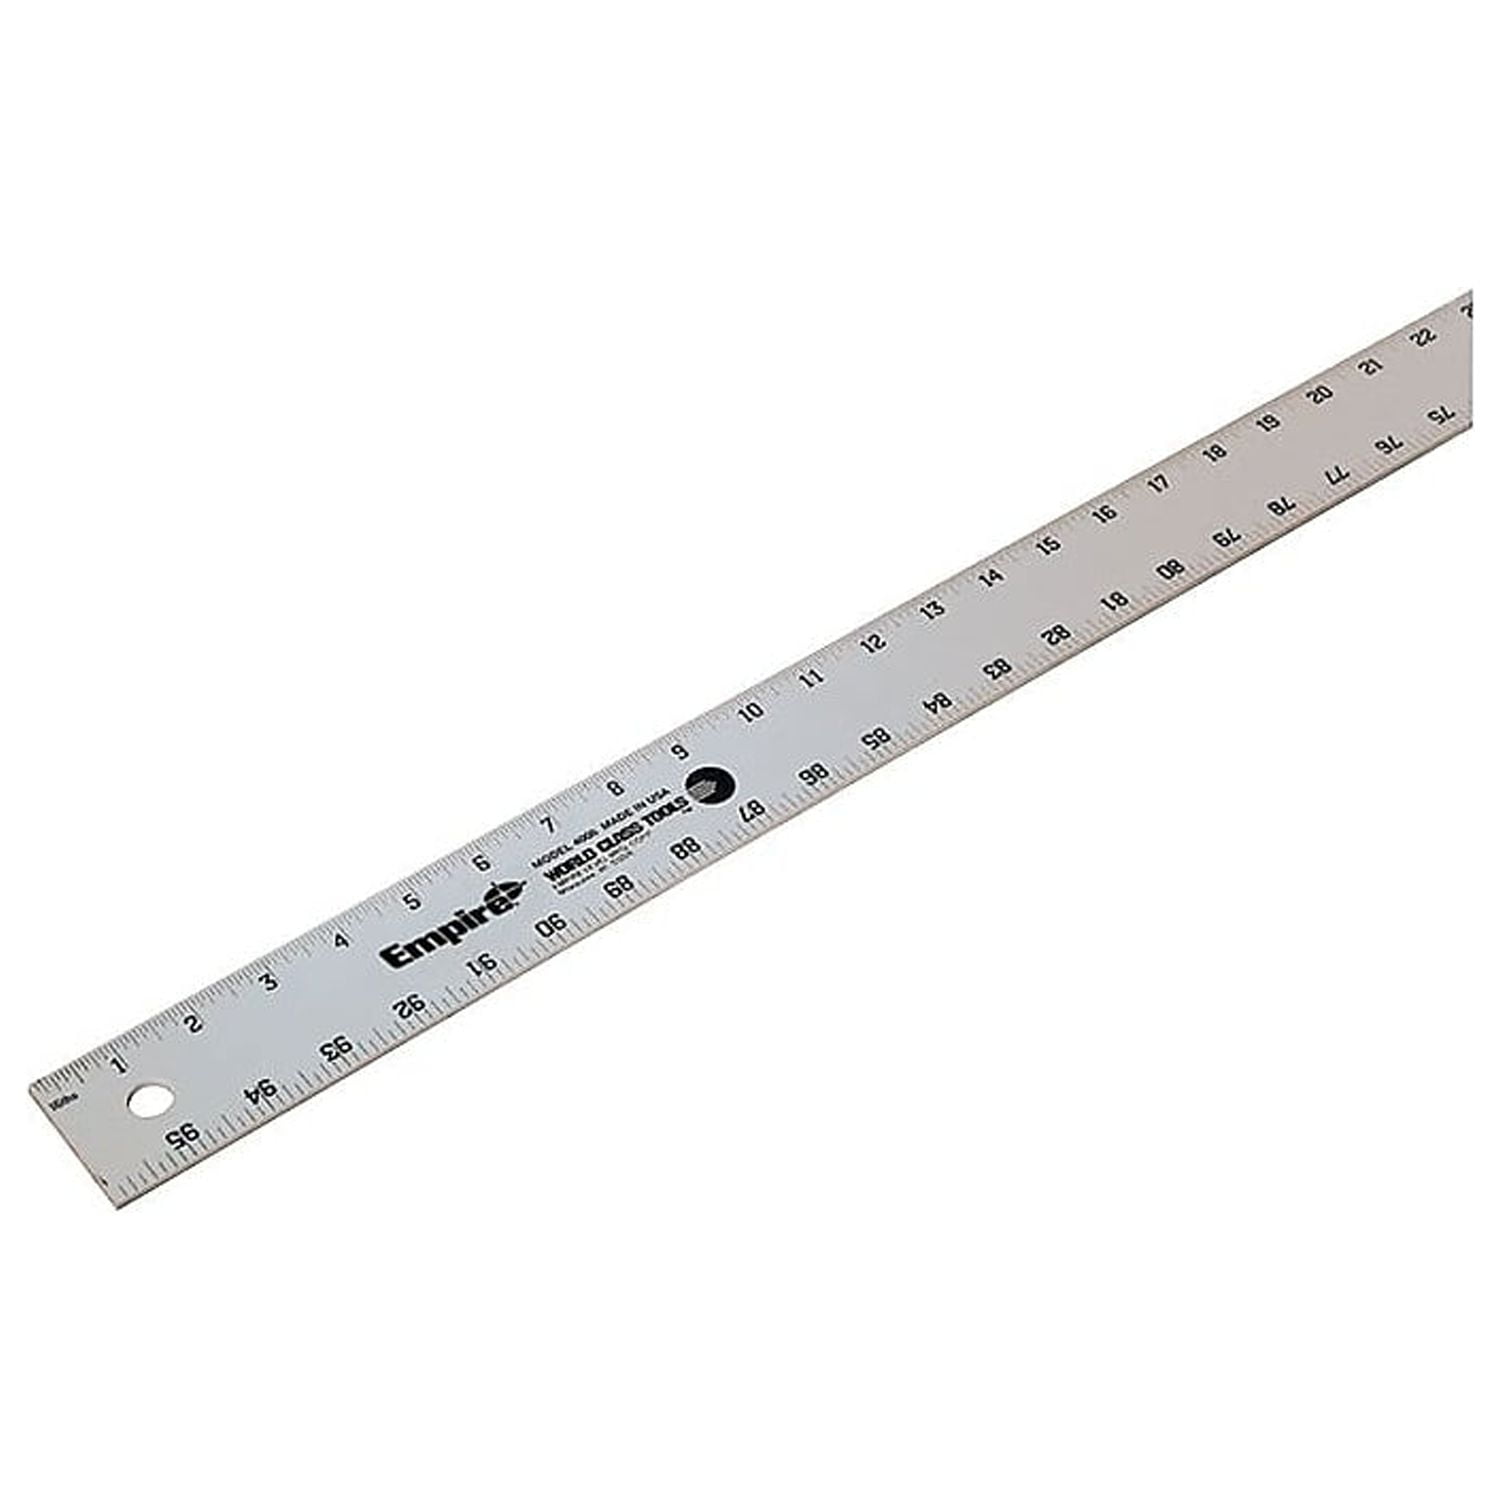 Breman Precision Metal Ruler 12 inch - Stainless Steel Cork Back Metal Ruler - Premium Steel Straight Edge 12 inch Metal Ruler Set of 10 - Flexible